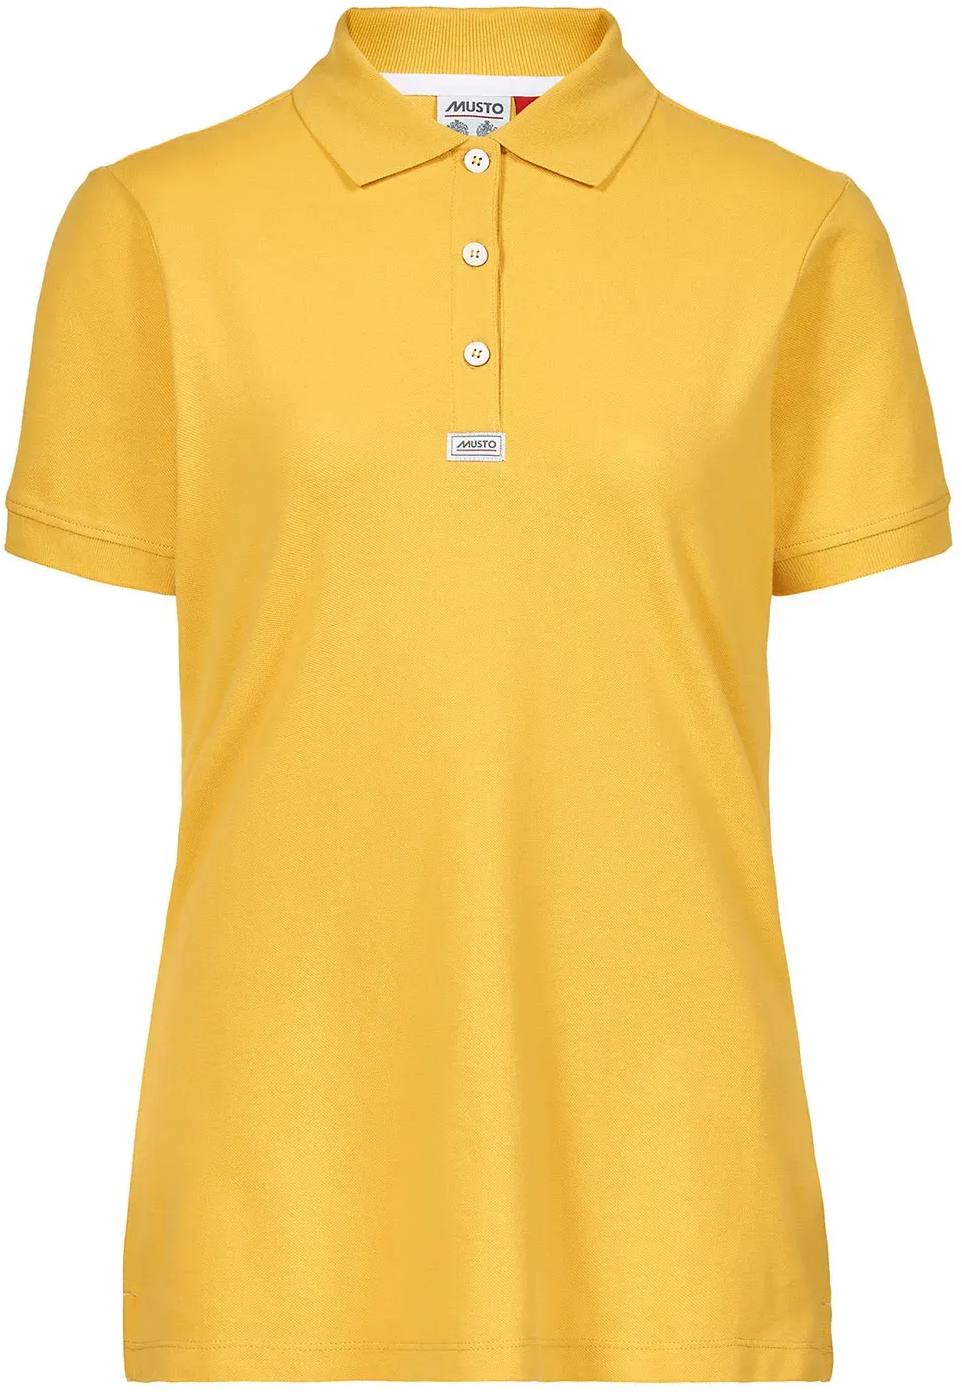 Musto Women’s Essential Pique Short-Sleeve Polo Shirt